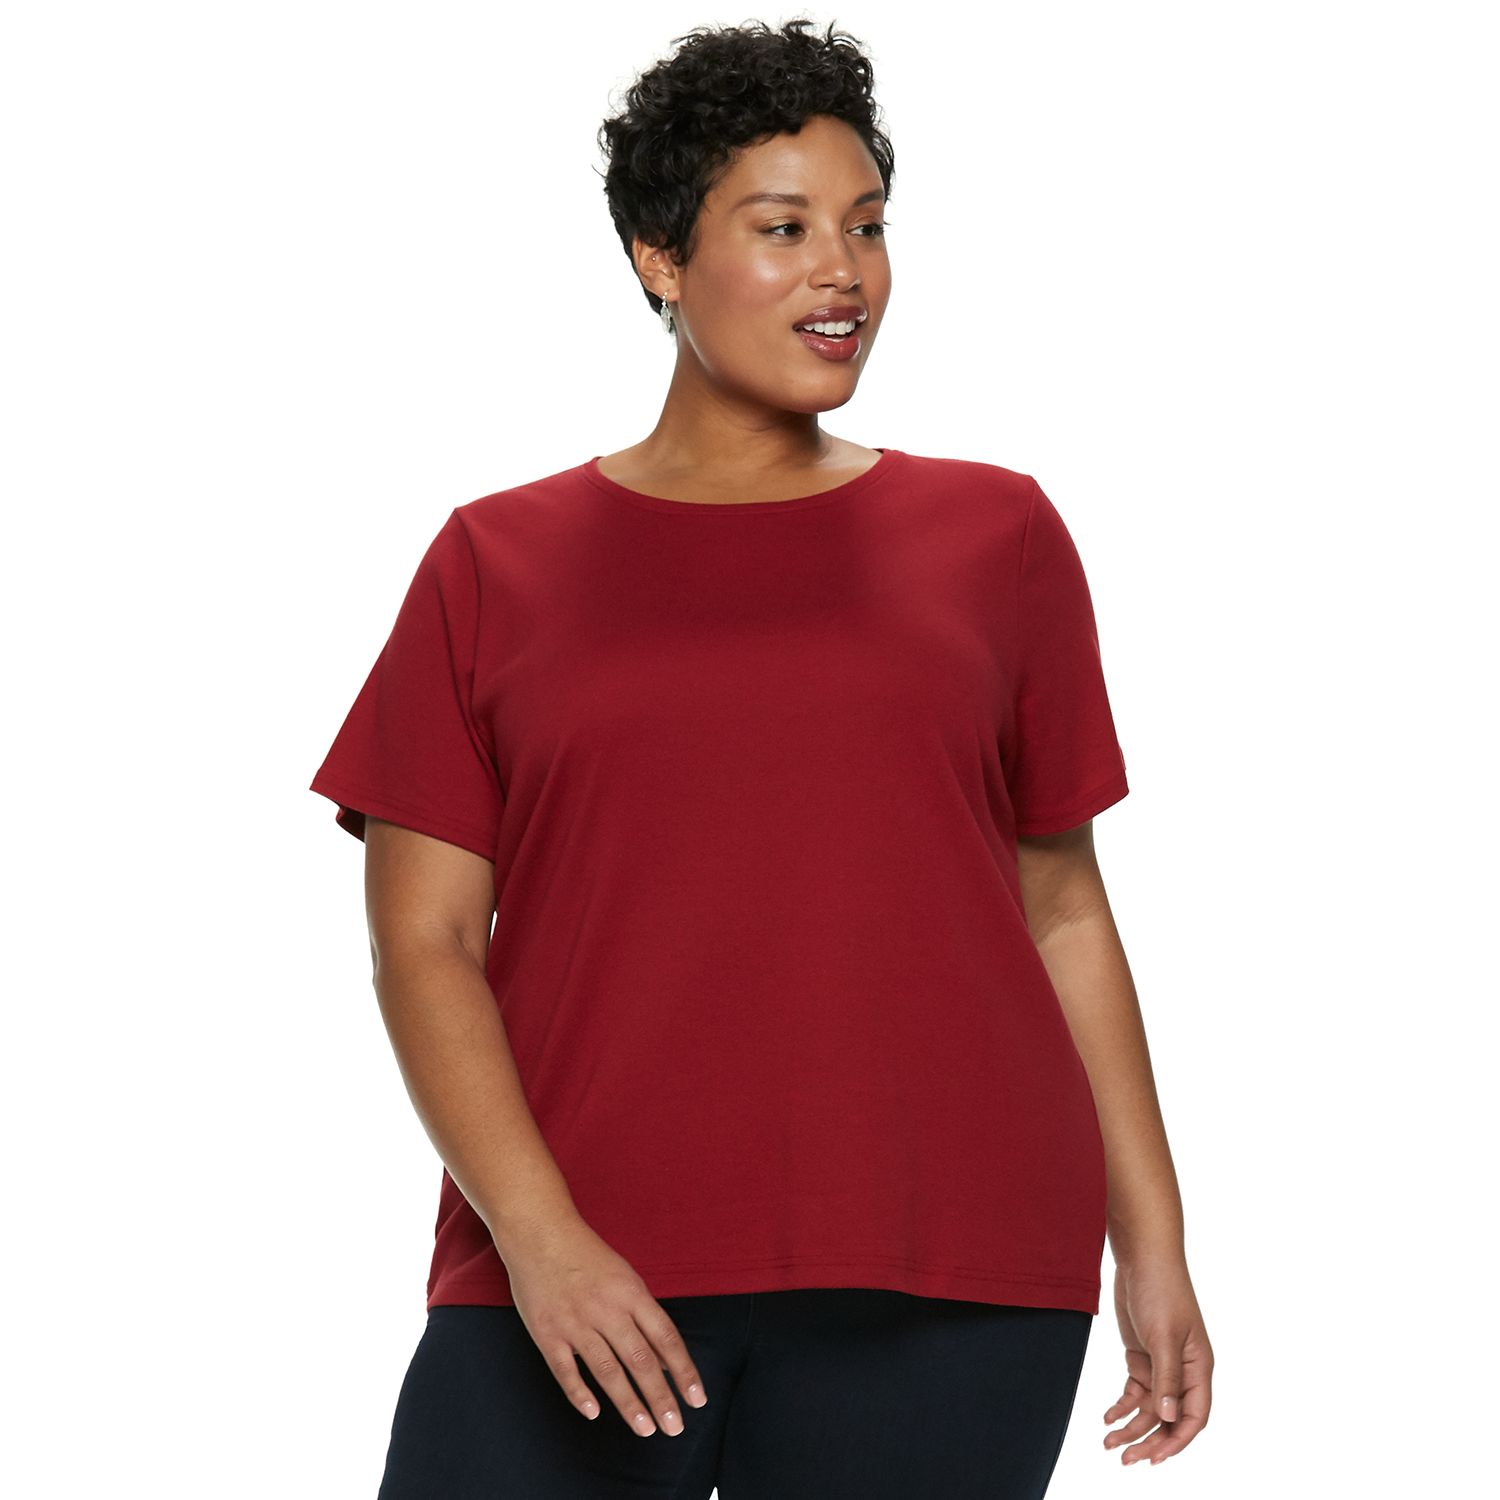 Women's Red Plus Size Shirts | Kohl's